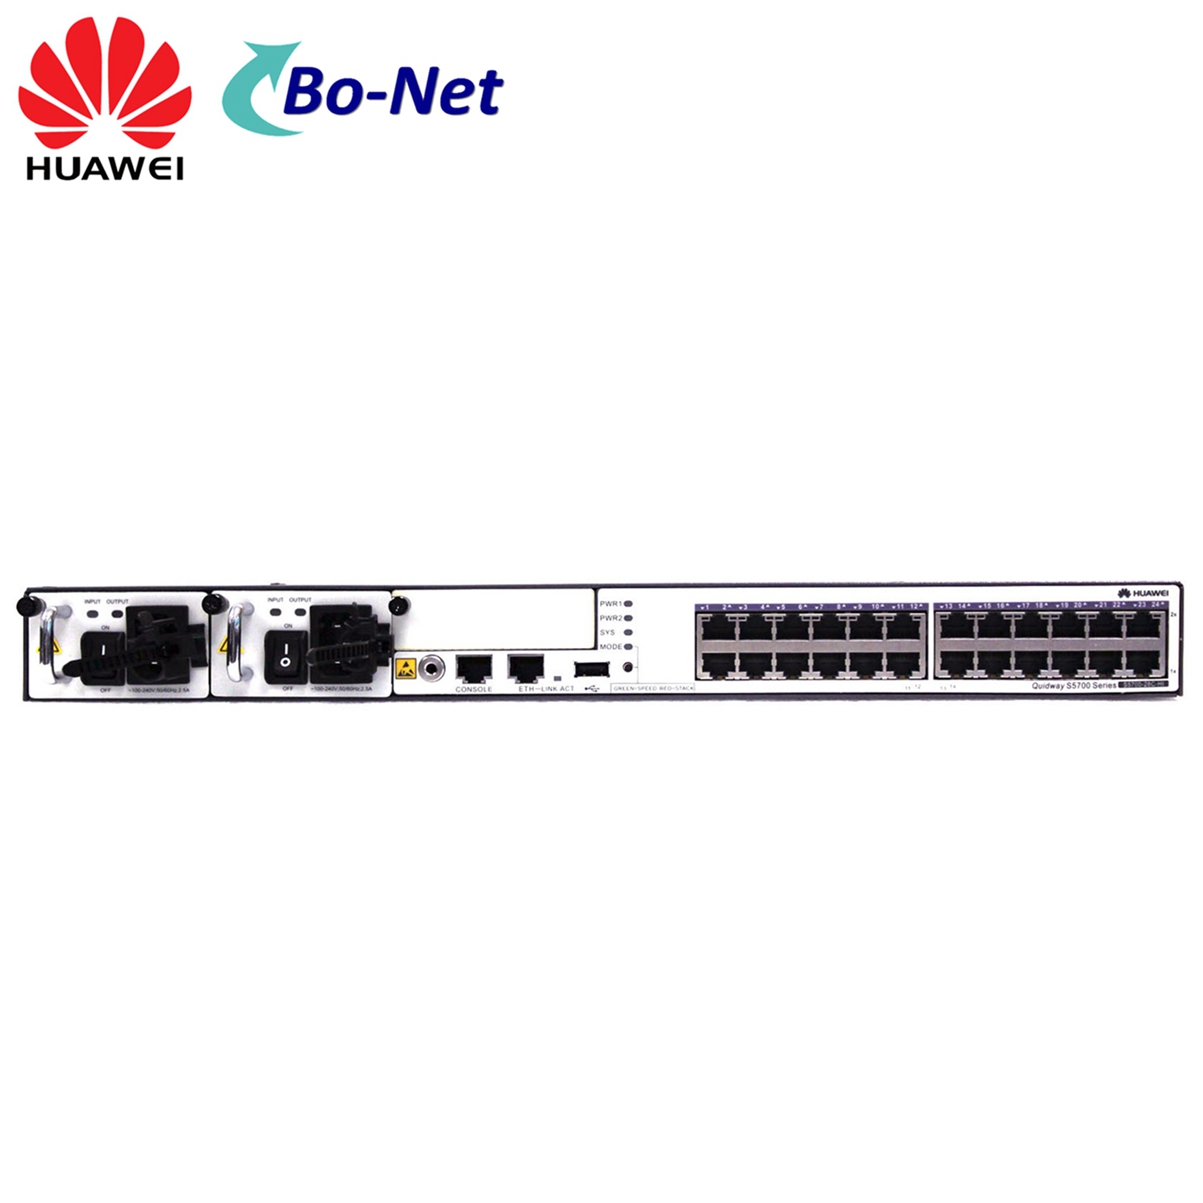 Huawei S5700-28C-HI 24 port Gigabit Enterprise Switch Network Management Switch